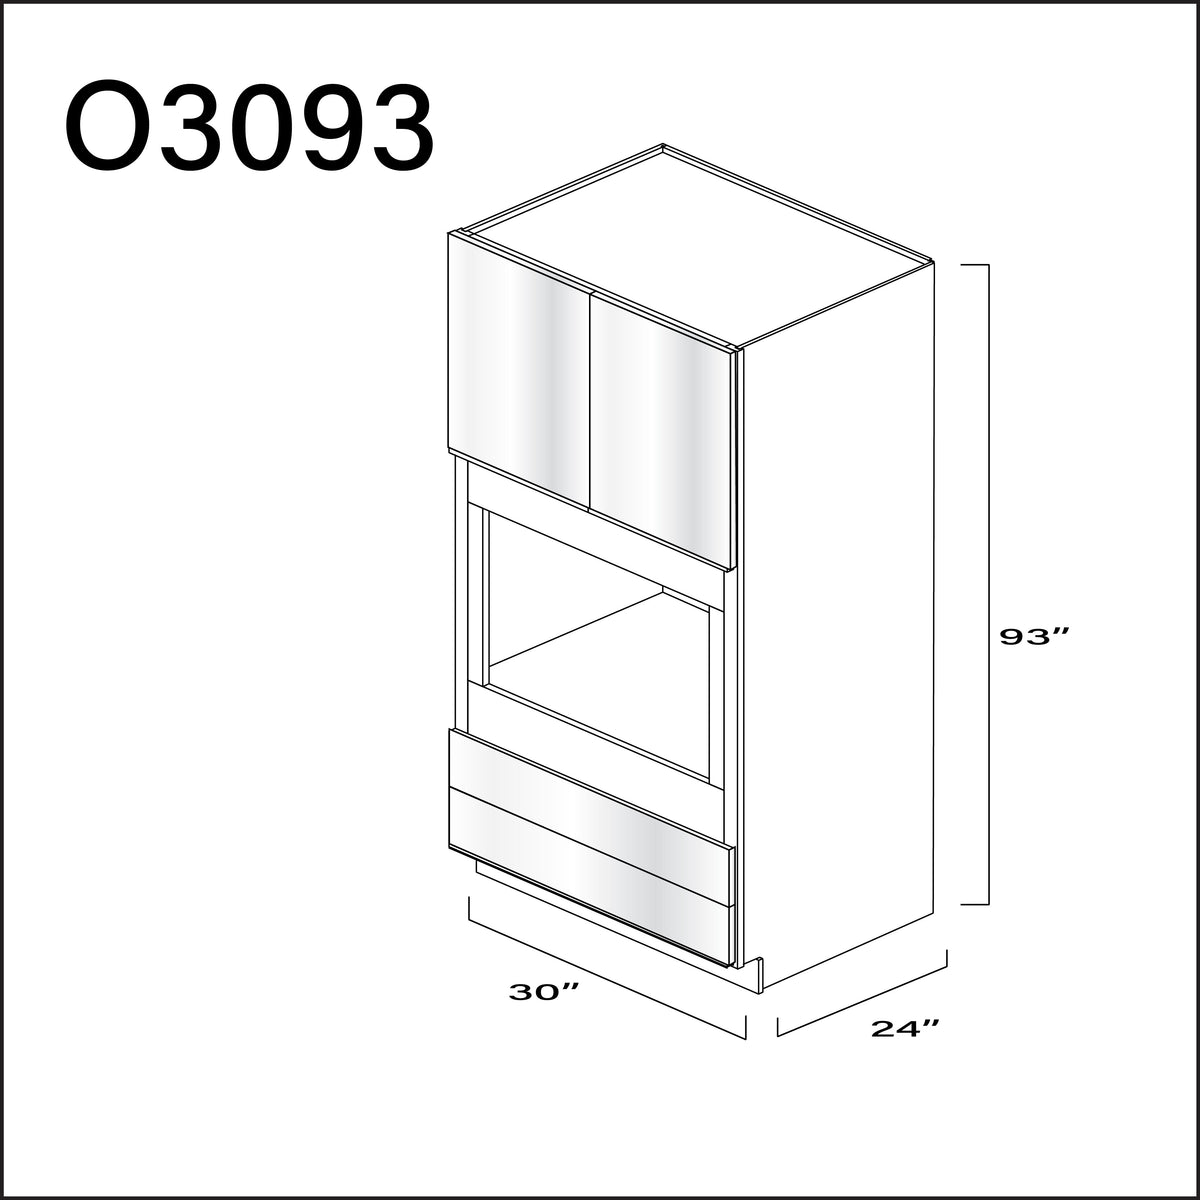 Glossy White Frameless Single Oven Cabinet - 30" W x 93" H x 24" D